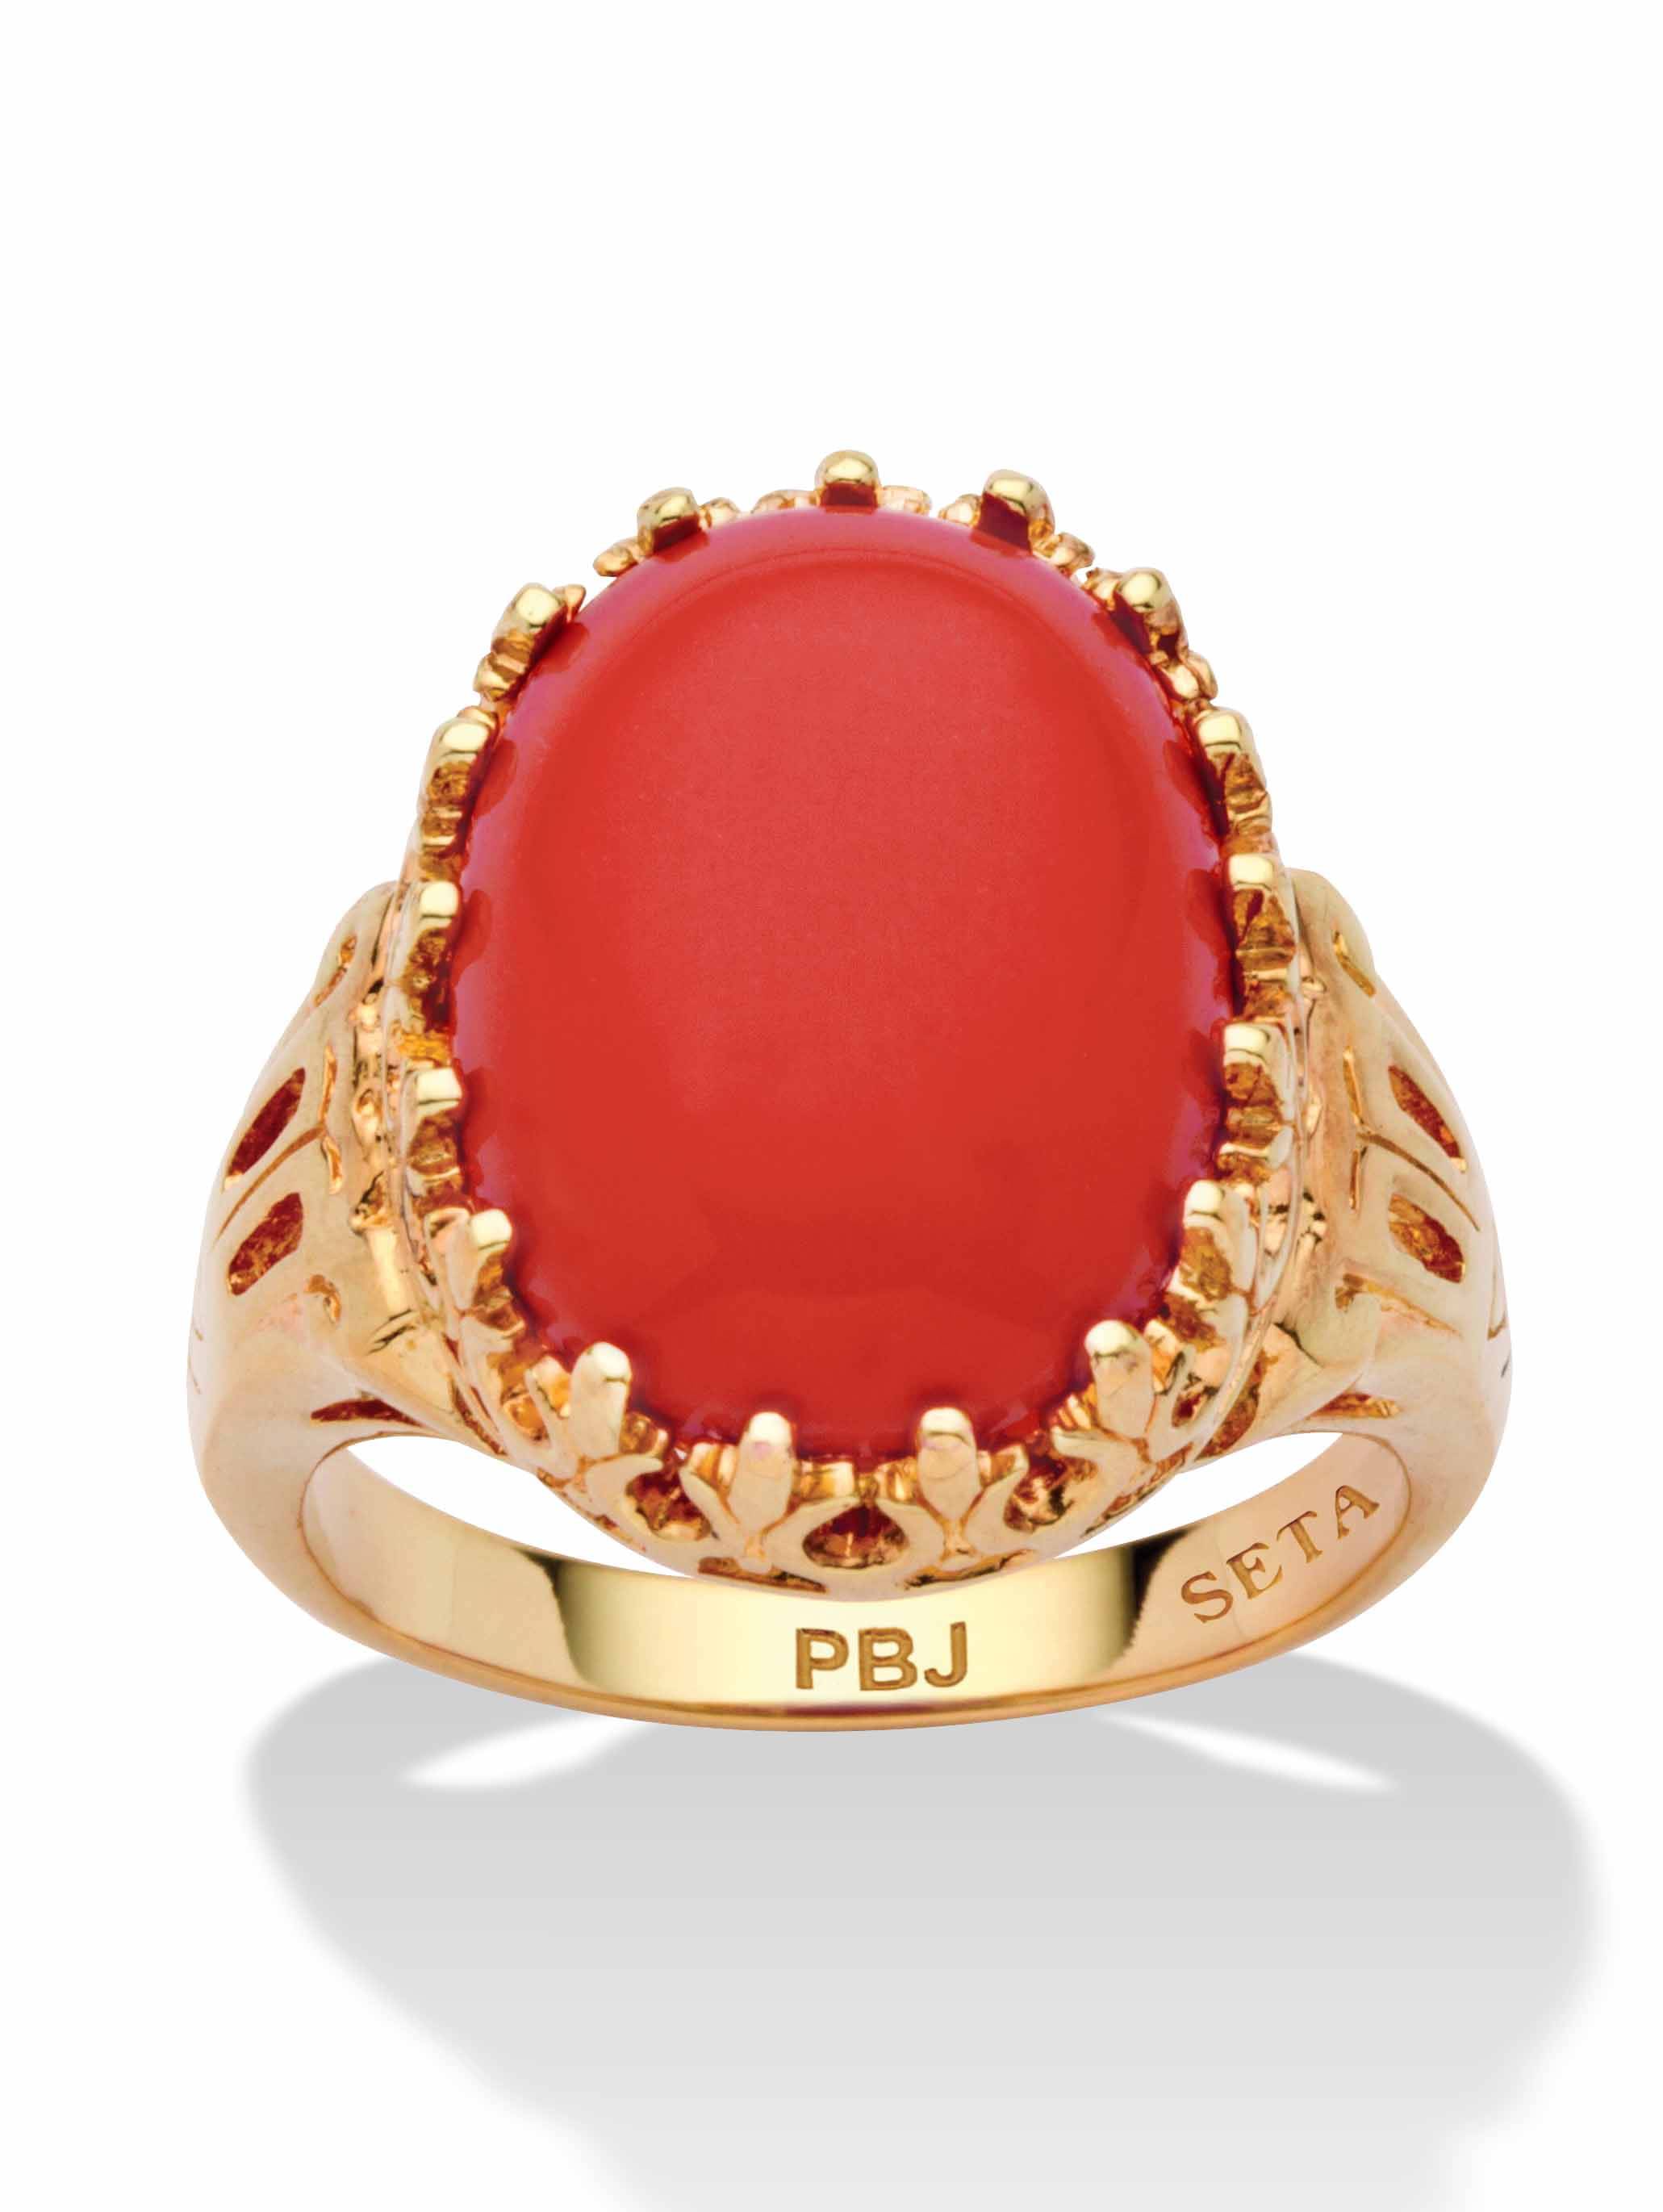 1 Gram Gold Forming Red Stone Streamlined Design Superior Quality Ring -  Style B001, सोने का पानी चढ़ी हुई अंगूठी - Soni Fashion, Rajkot | ID:  2851051587397